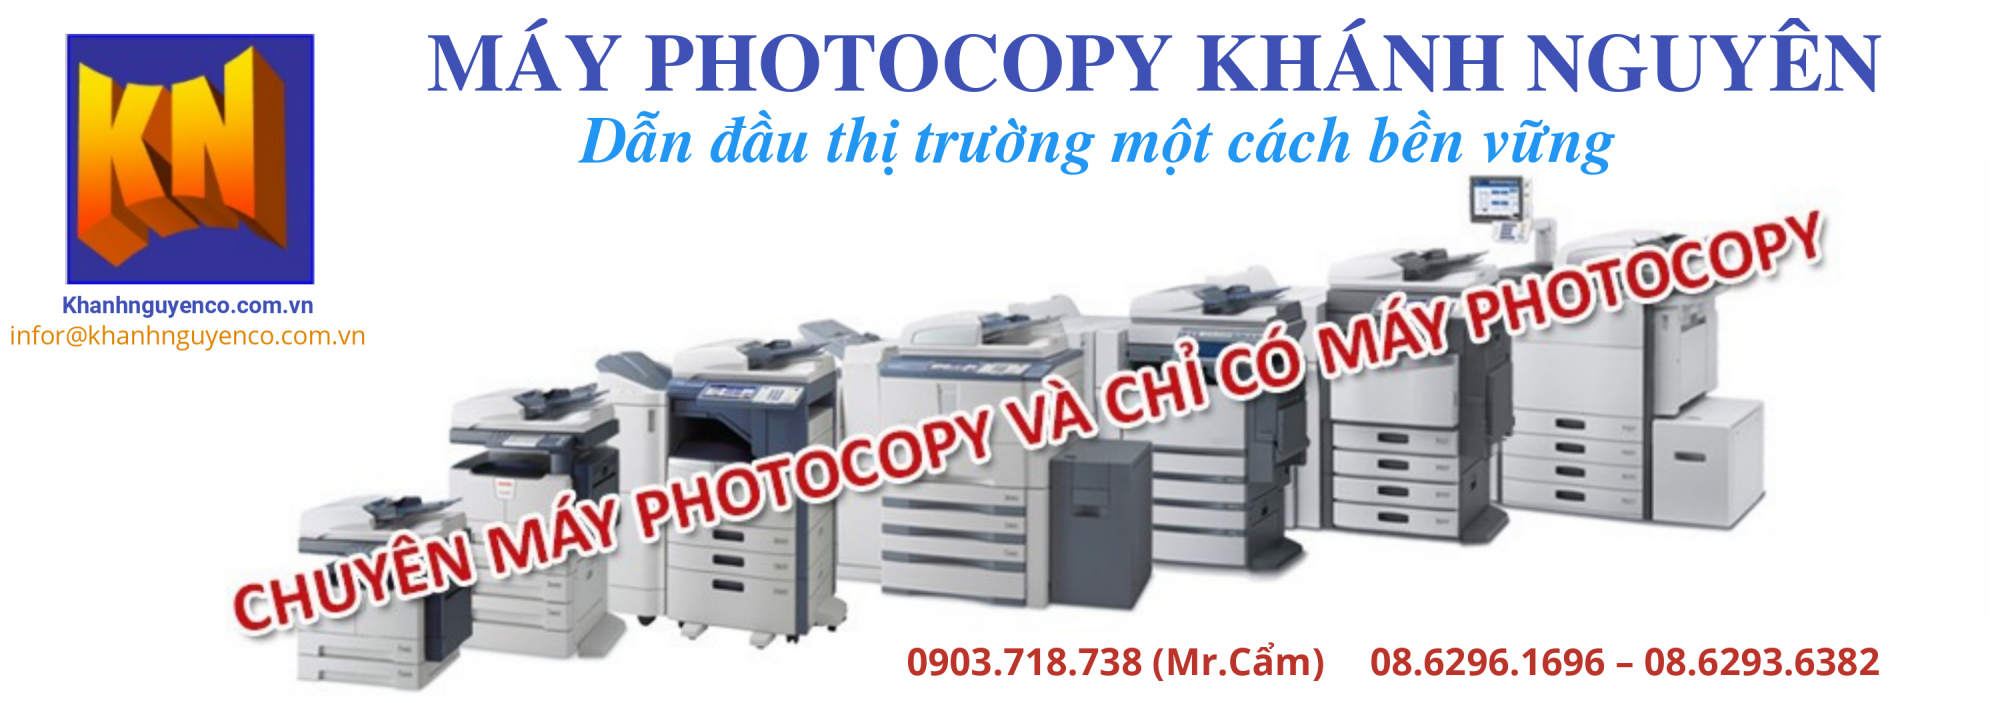 cách sử dụng máy photocopy